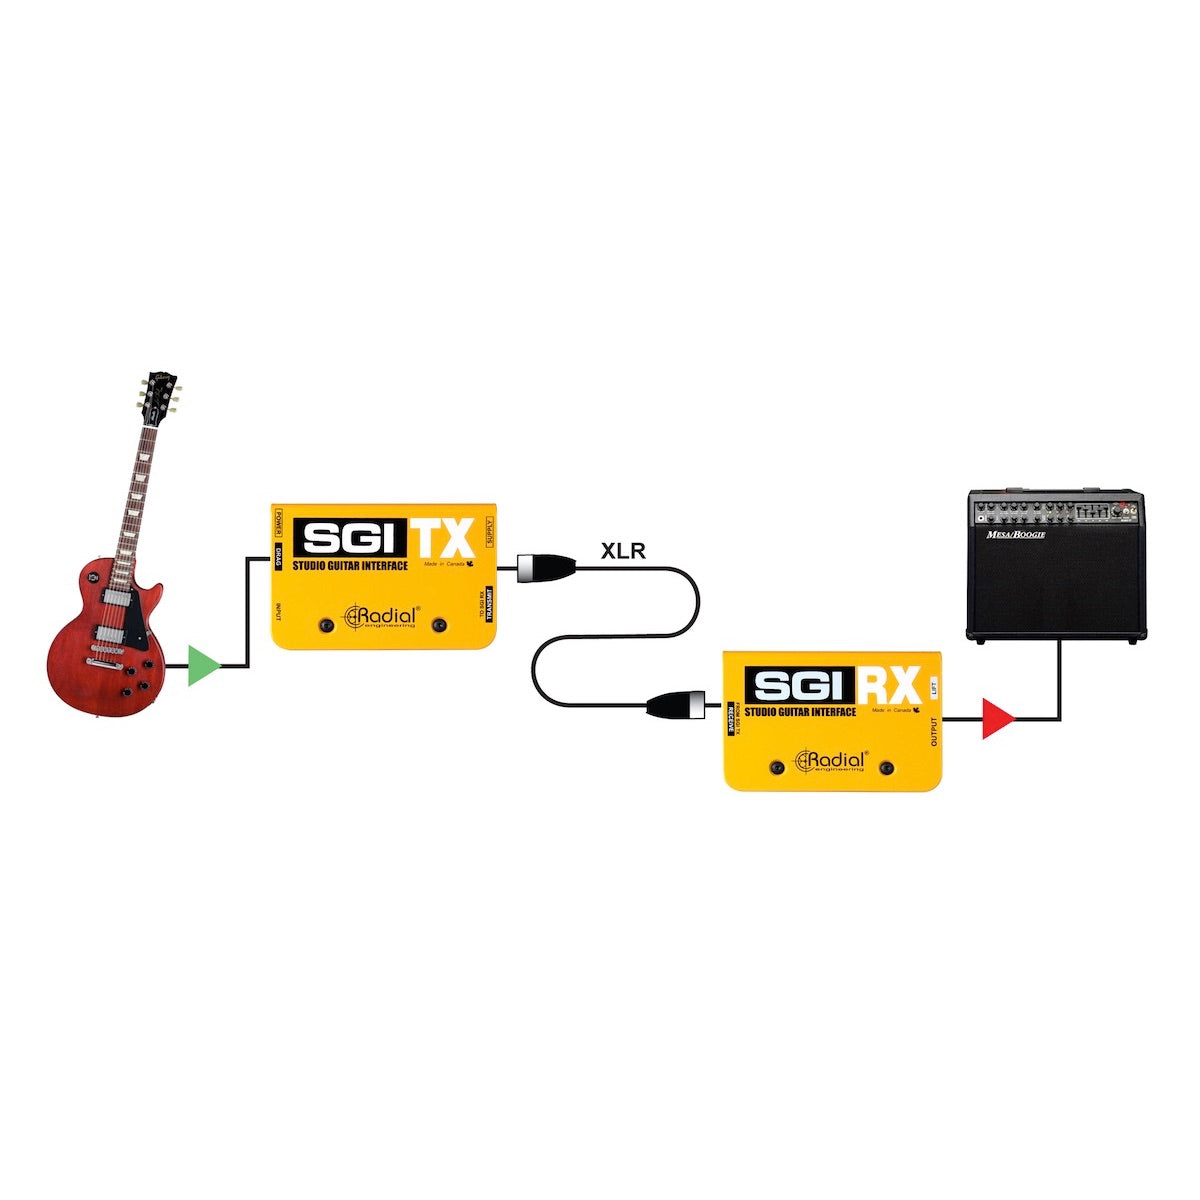 Radial SGI - Studio Guitar Interface System, application diagram